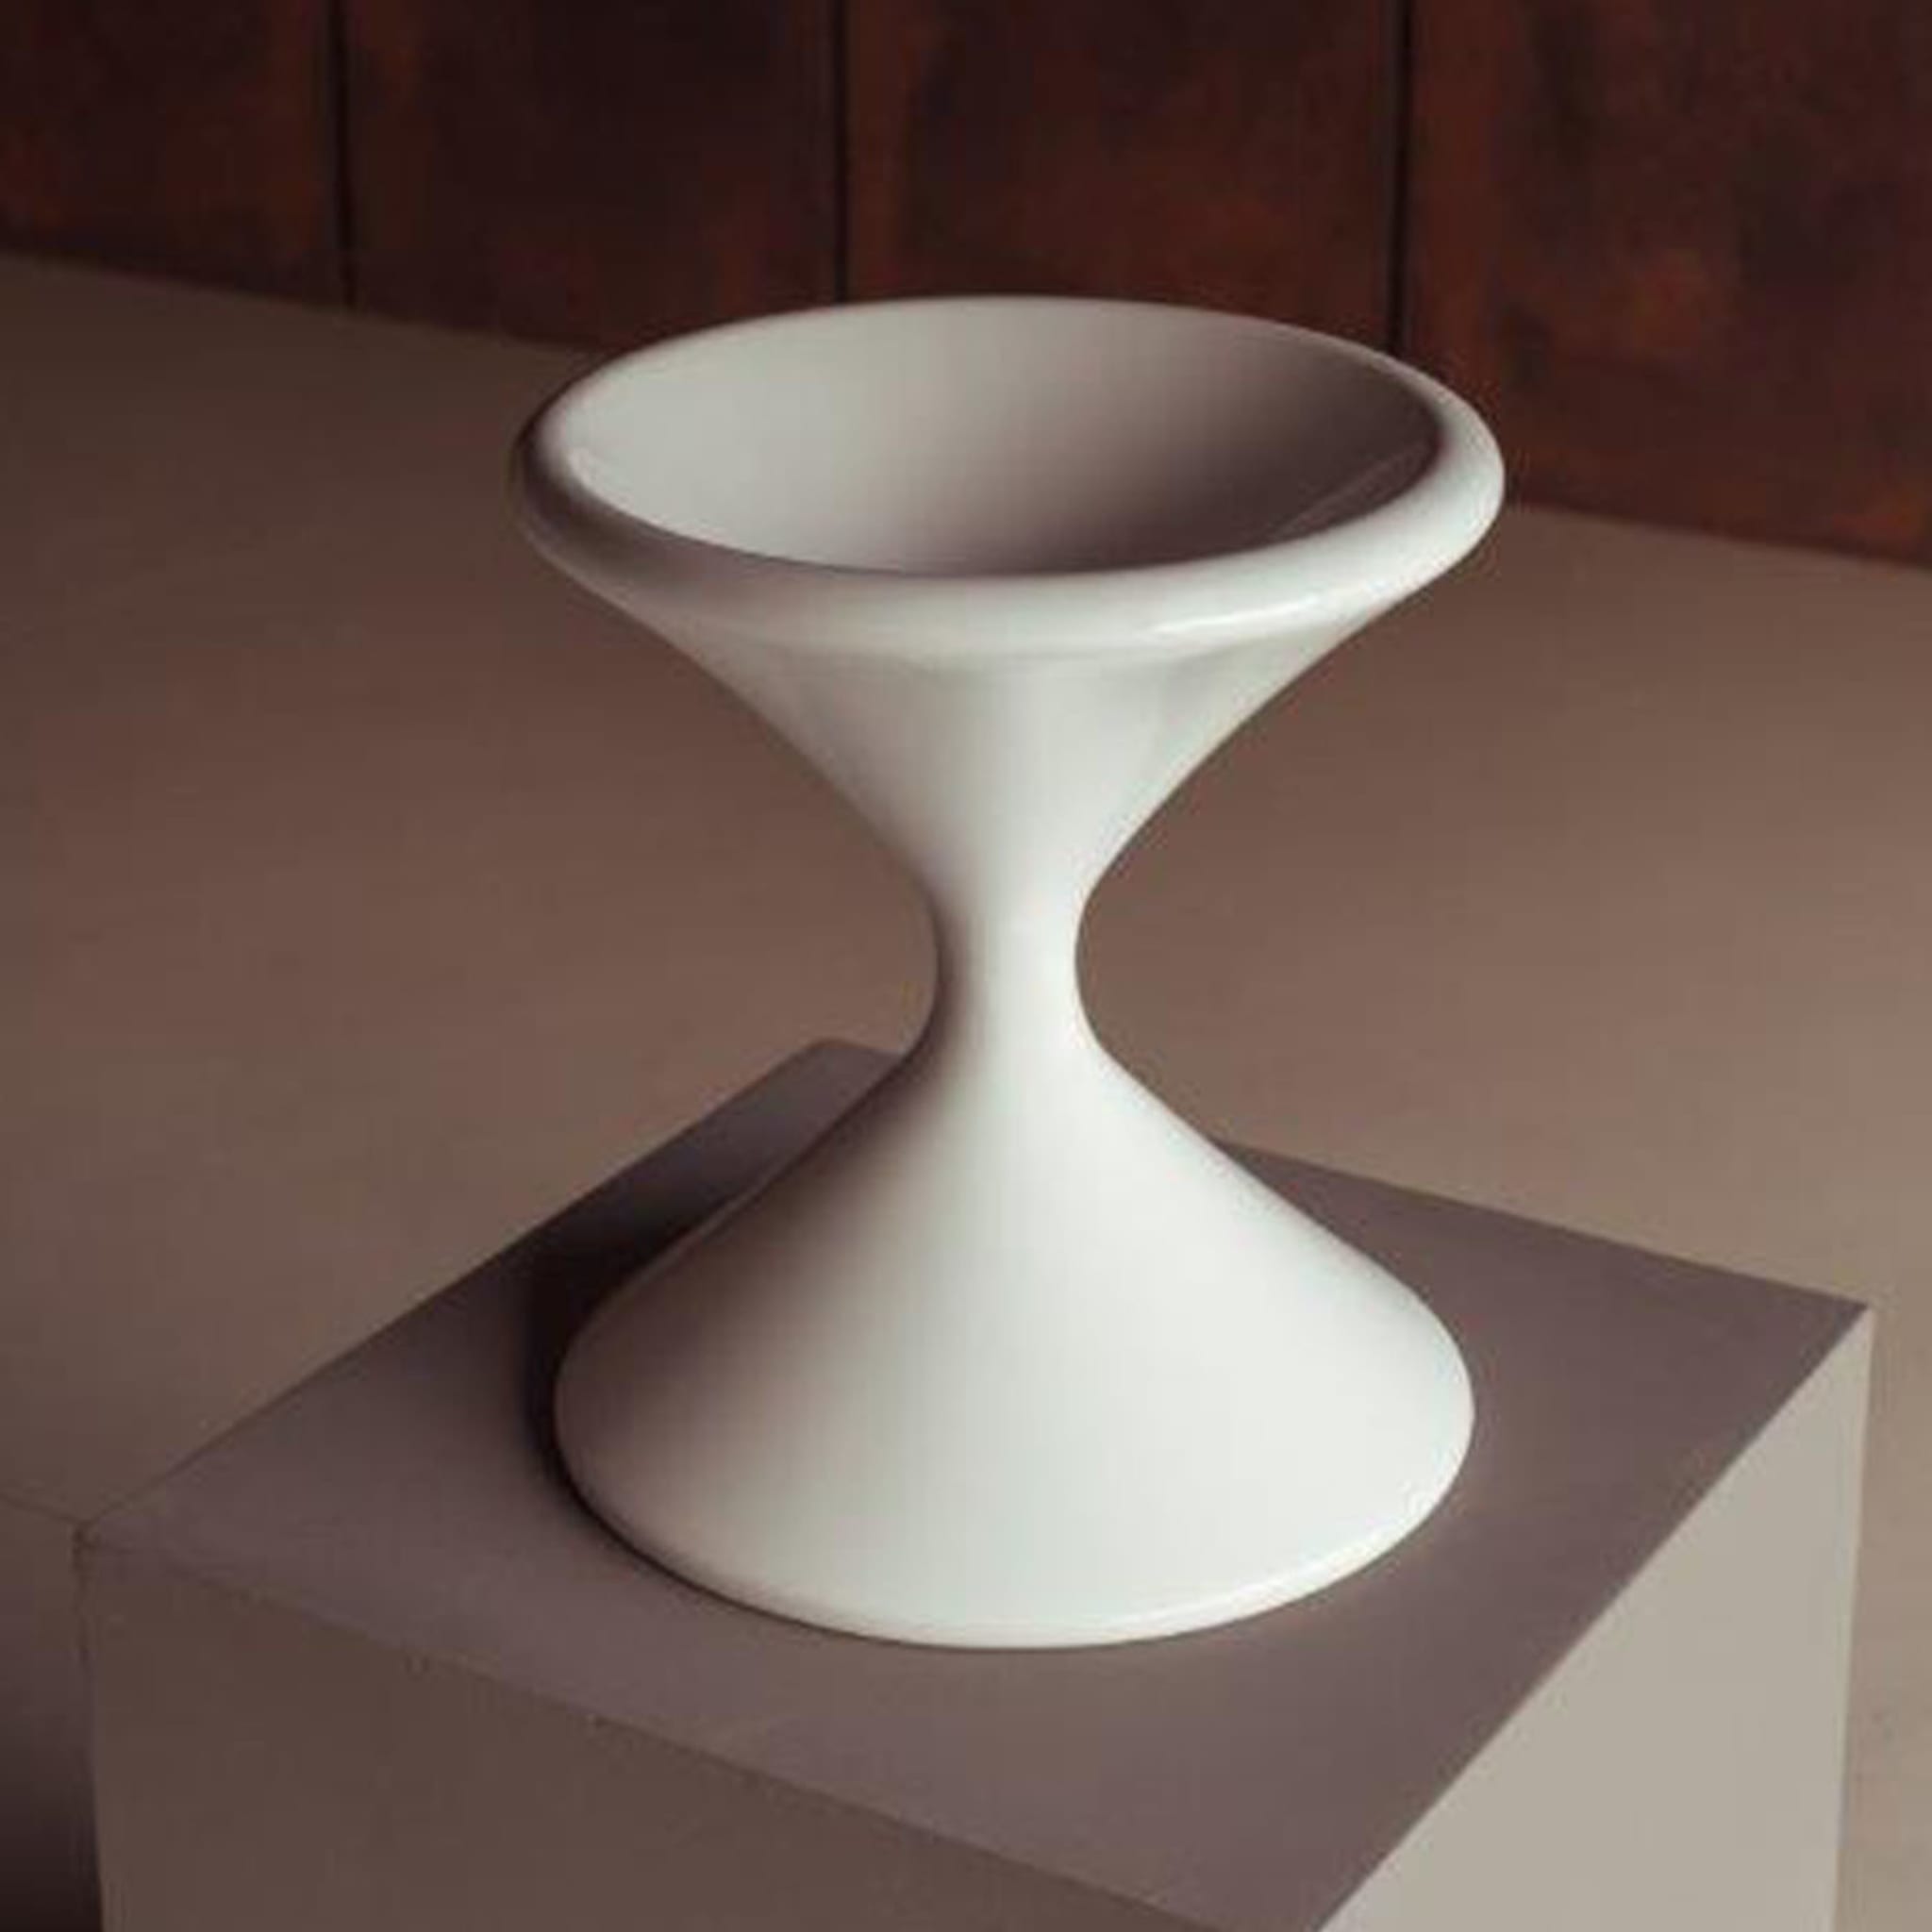 FoRMA Parabola White Vase by Simone Micheli - Alternative view 1